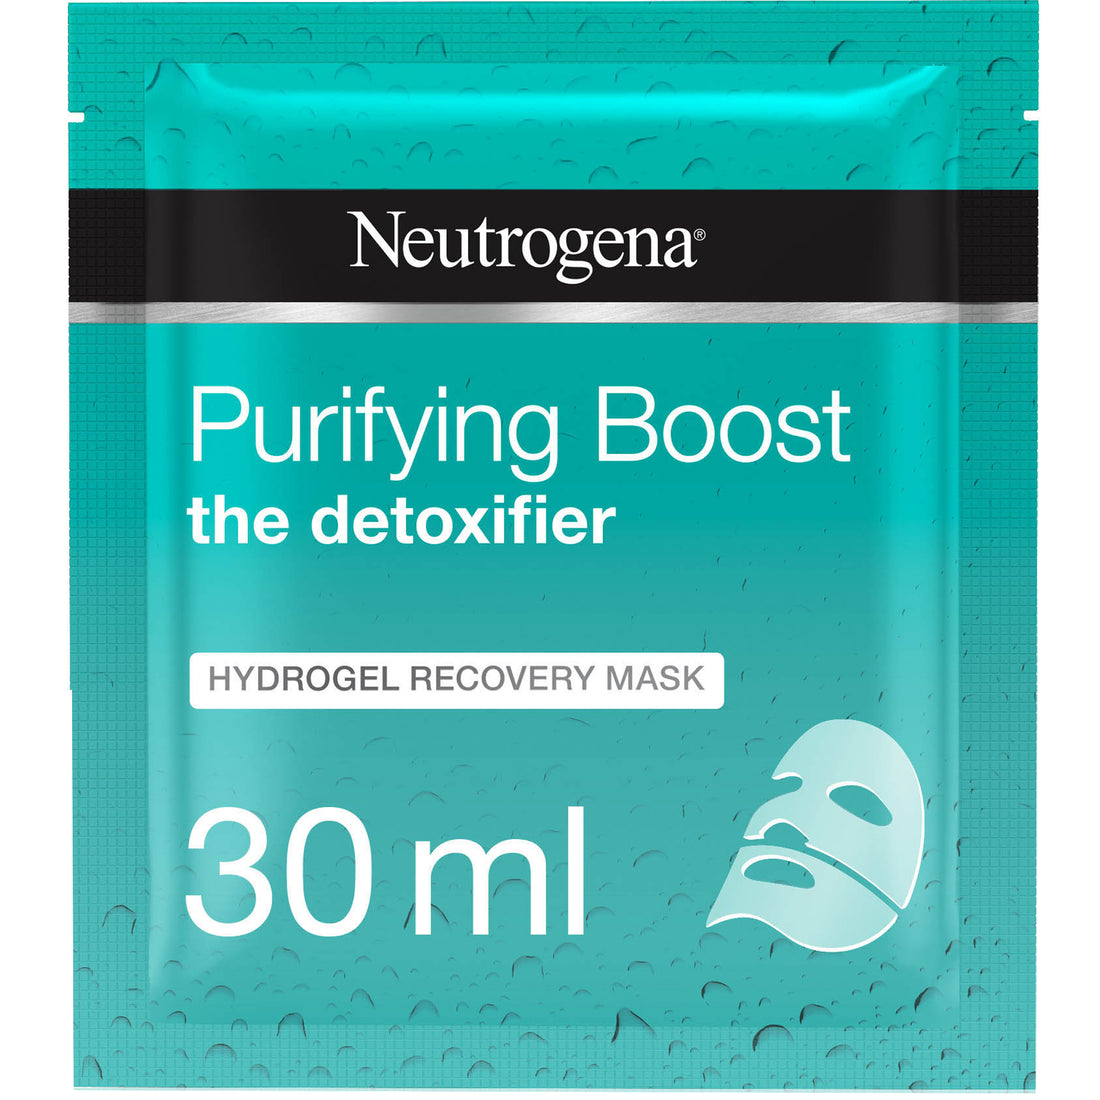 Neutrogena, The Detoxifier, Purifying Boost Hydrogel Recovery Mask, 30ml